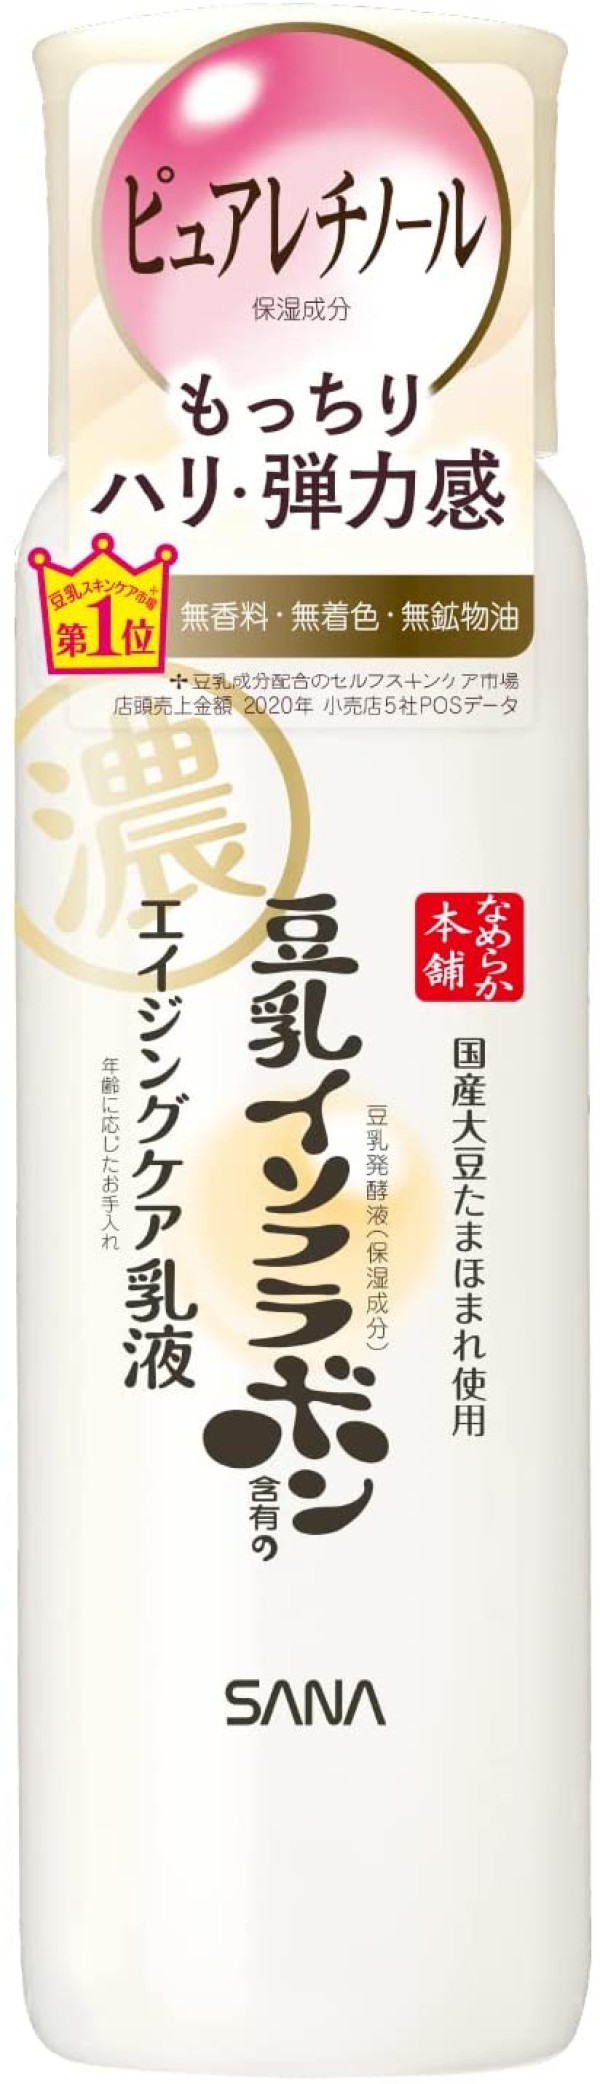 Увлажняющая эмульсия против морщины Nameraka Honpo Wrinkle Emulsion N